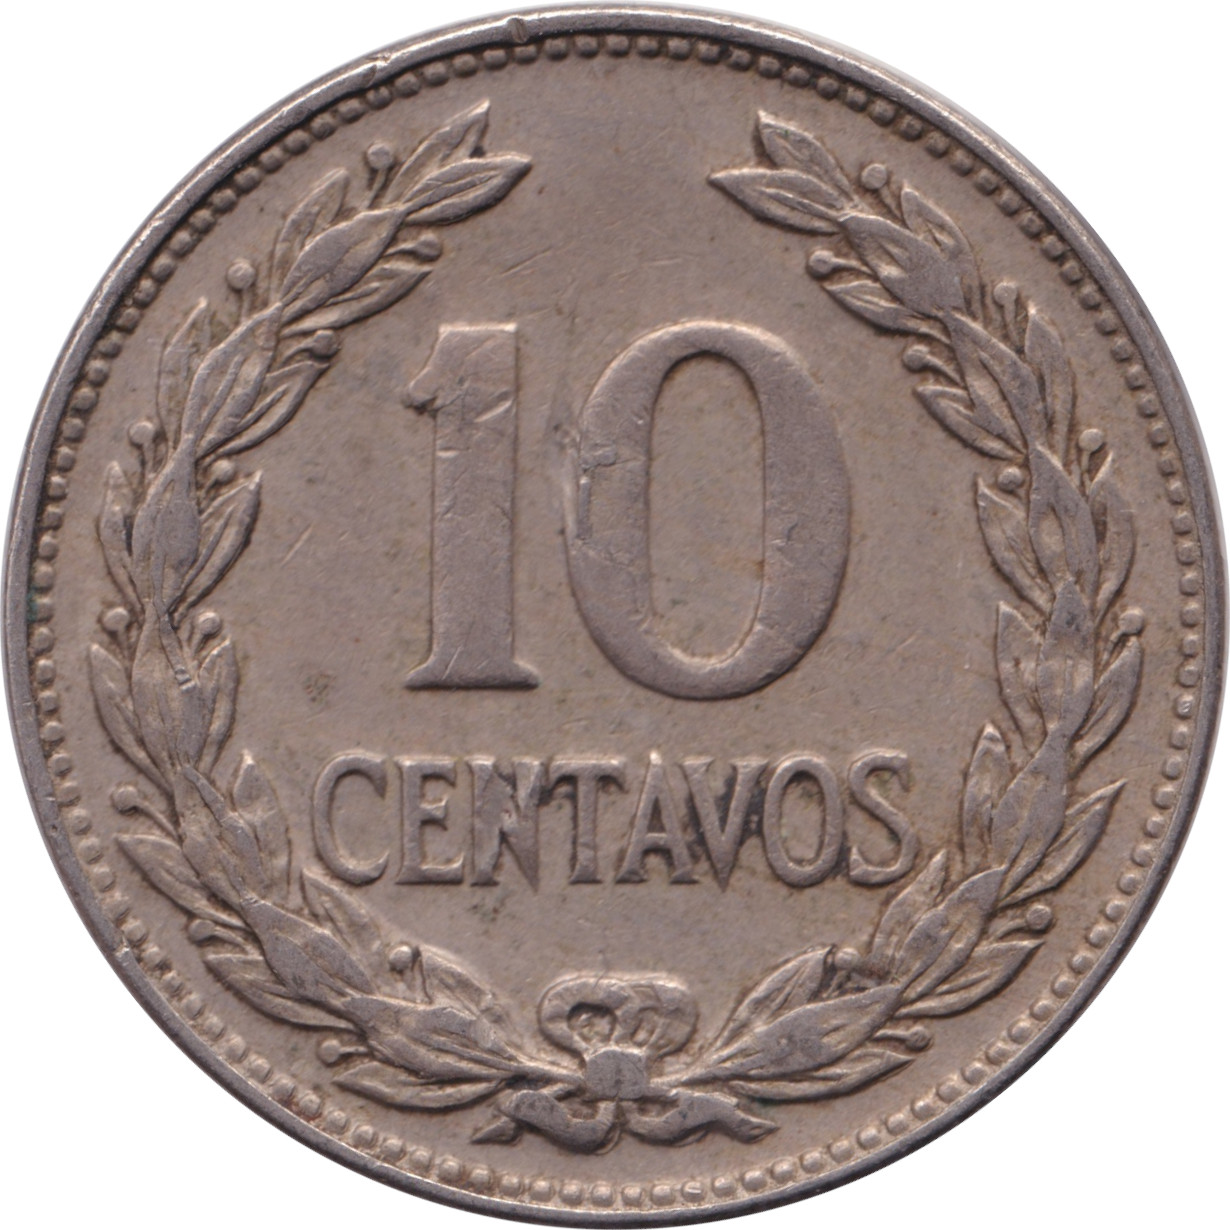 10 centavos - Francisco Morazan • Type 1